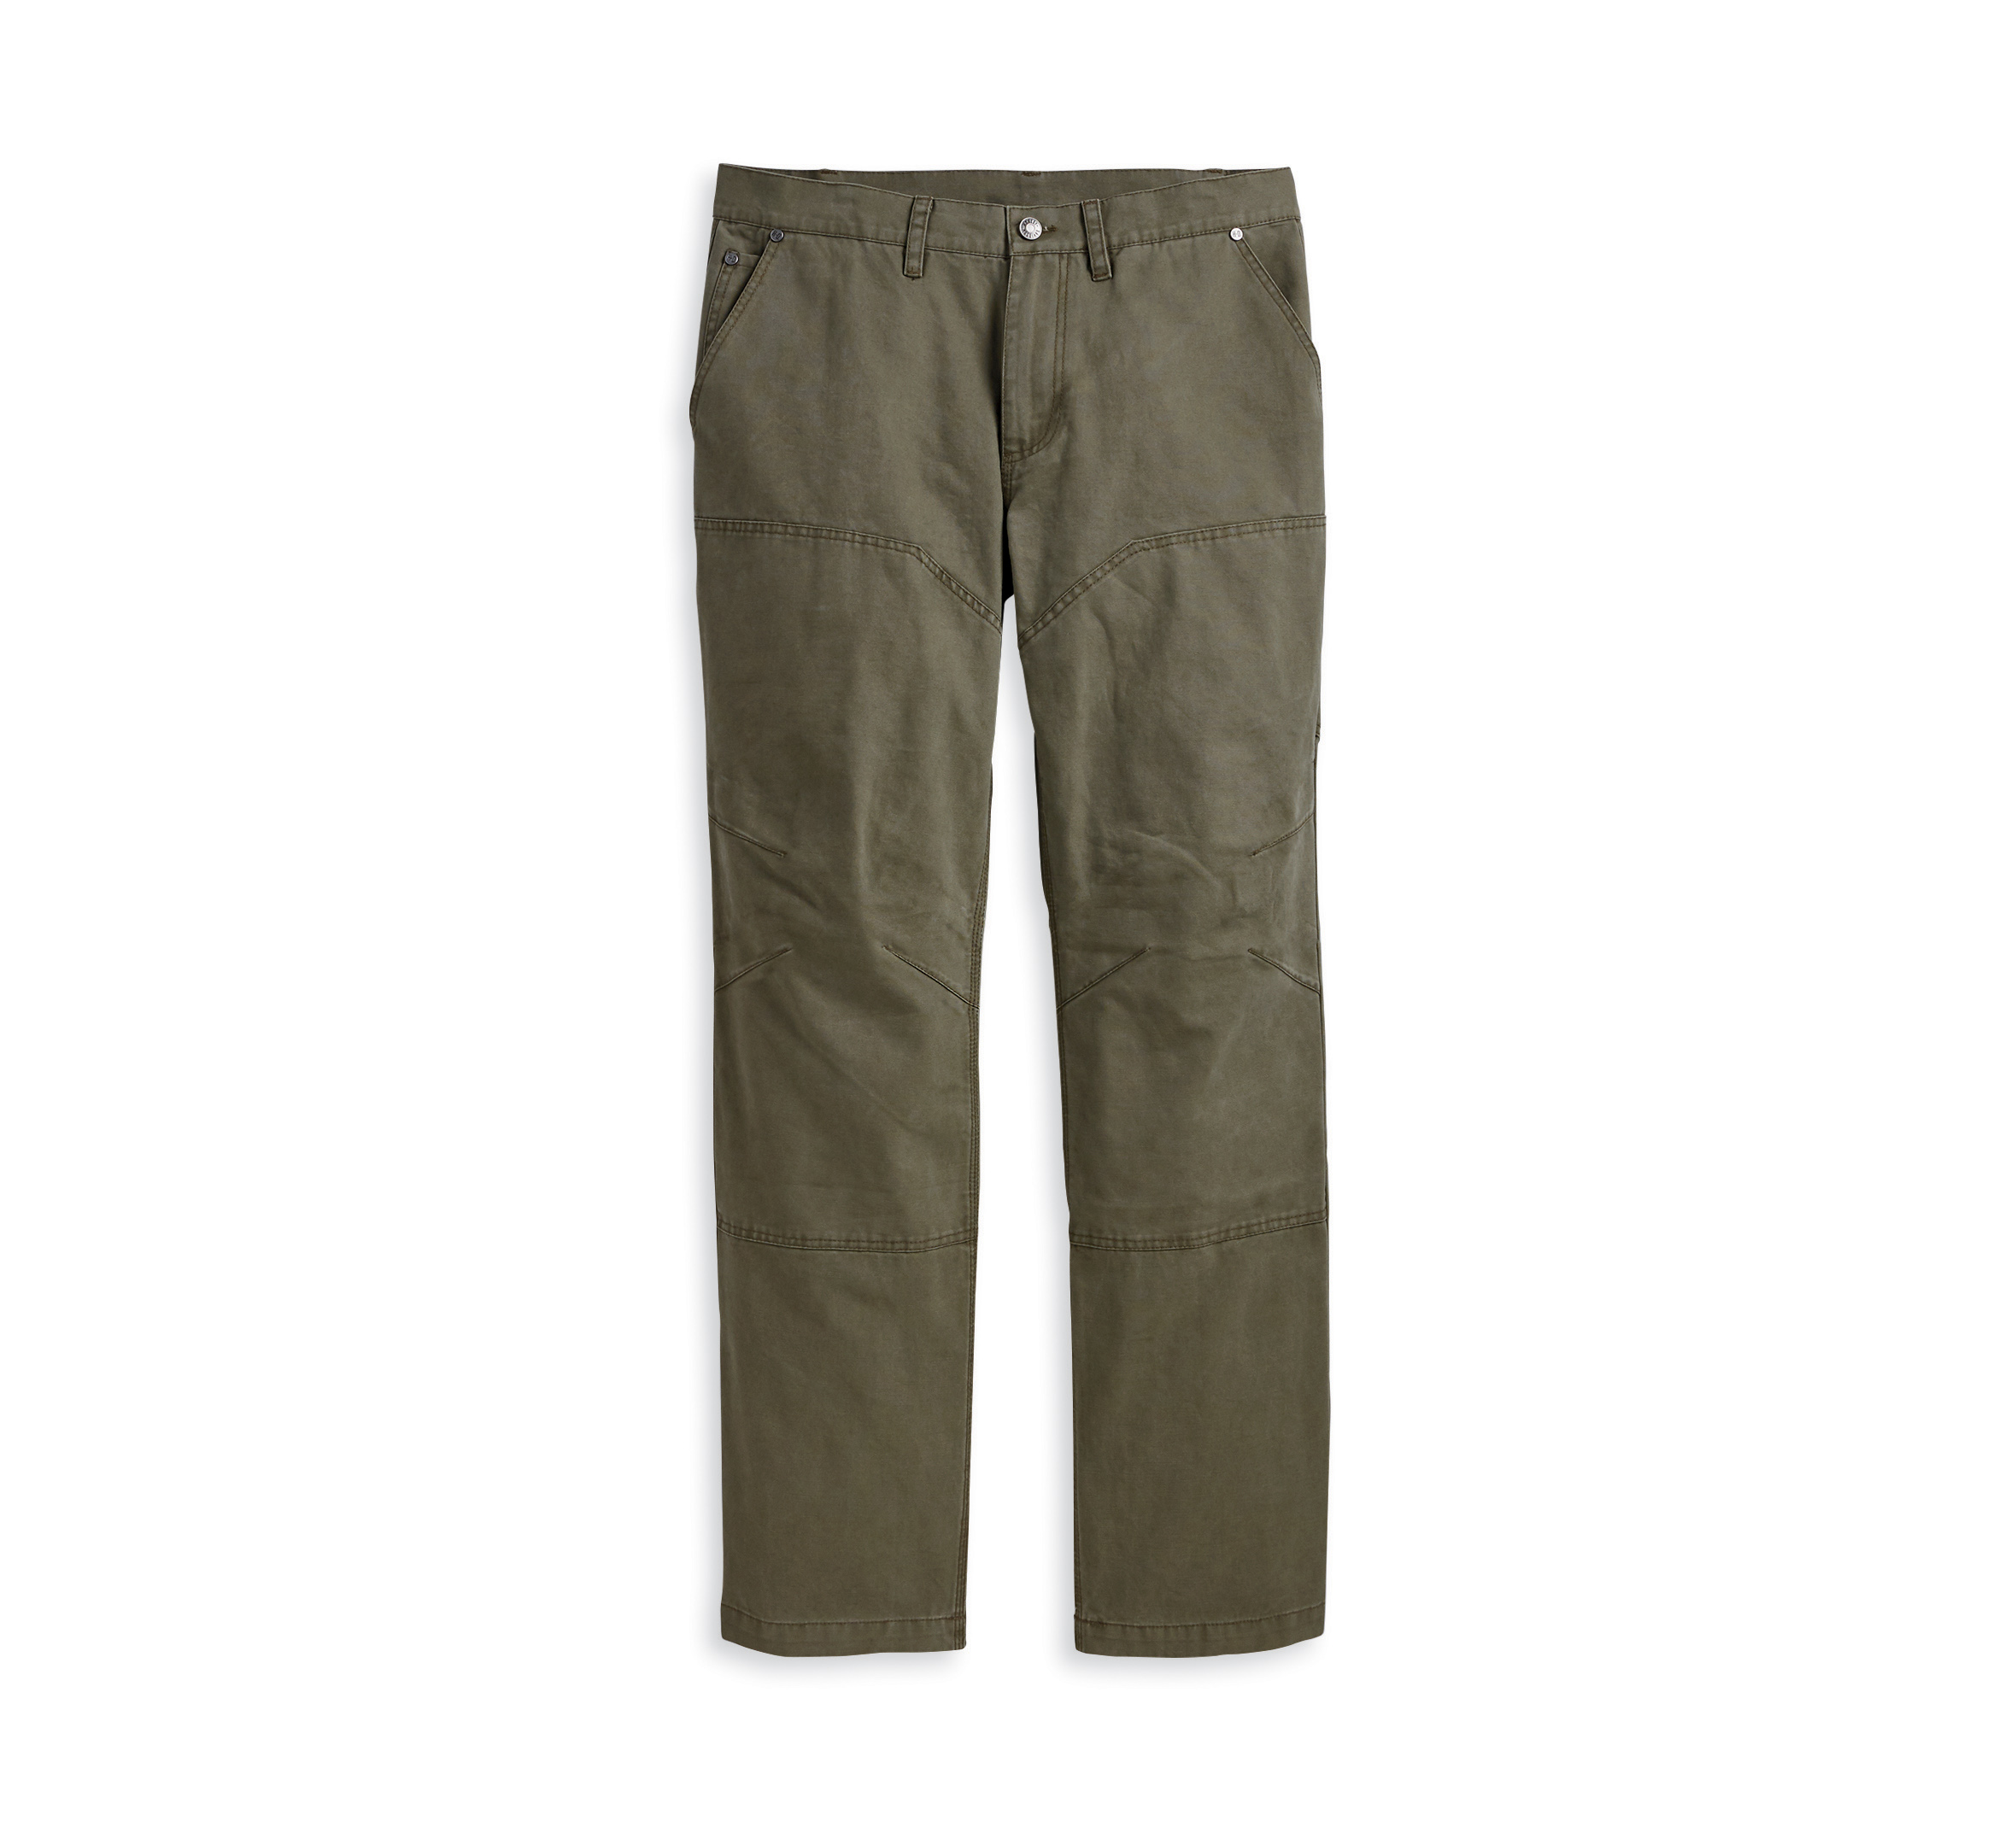 MNML Bootcut Contrast Cargo Pants Camo | Camo pants outfit men, Cargo pants  outfit men, Camo pants men